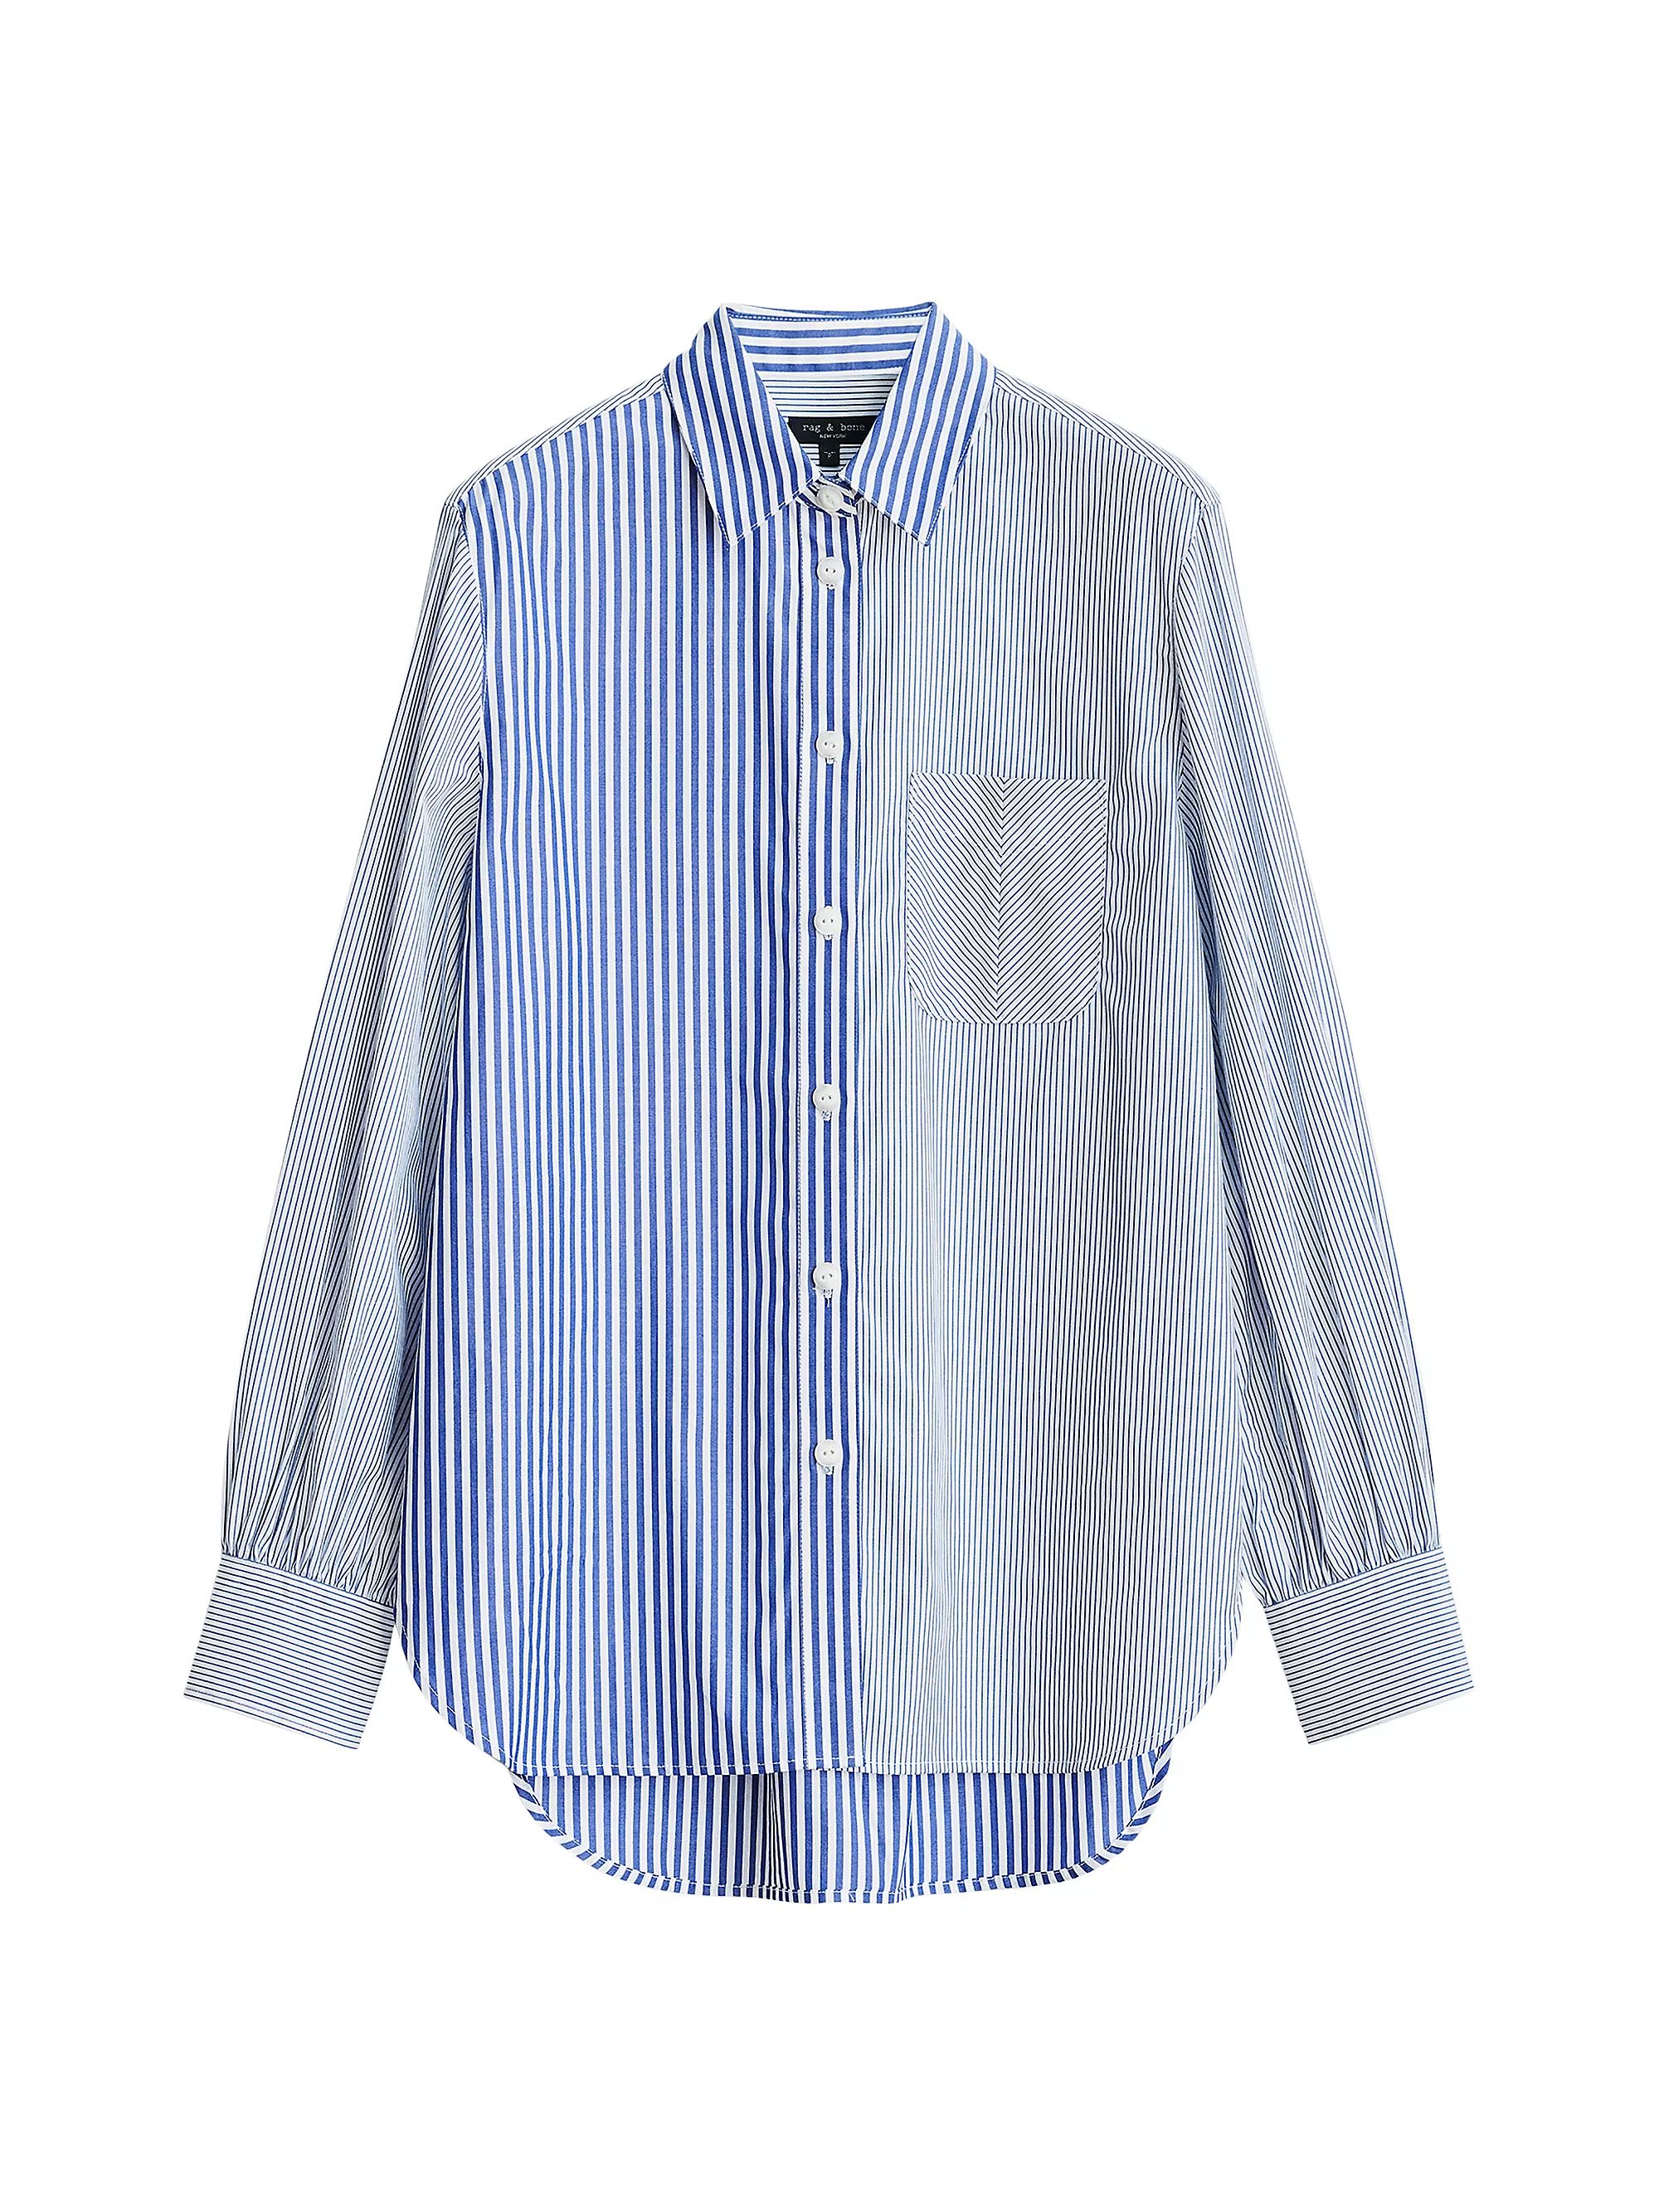 Maxine Multi-Striped Cotton Shirt | Saks Fifth Avenue